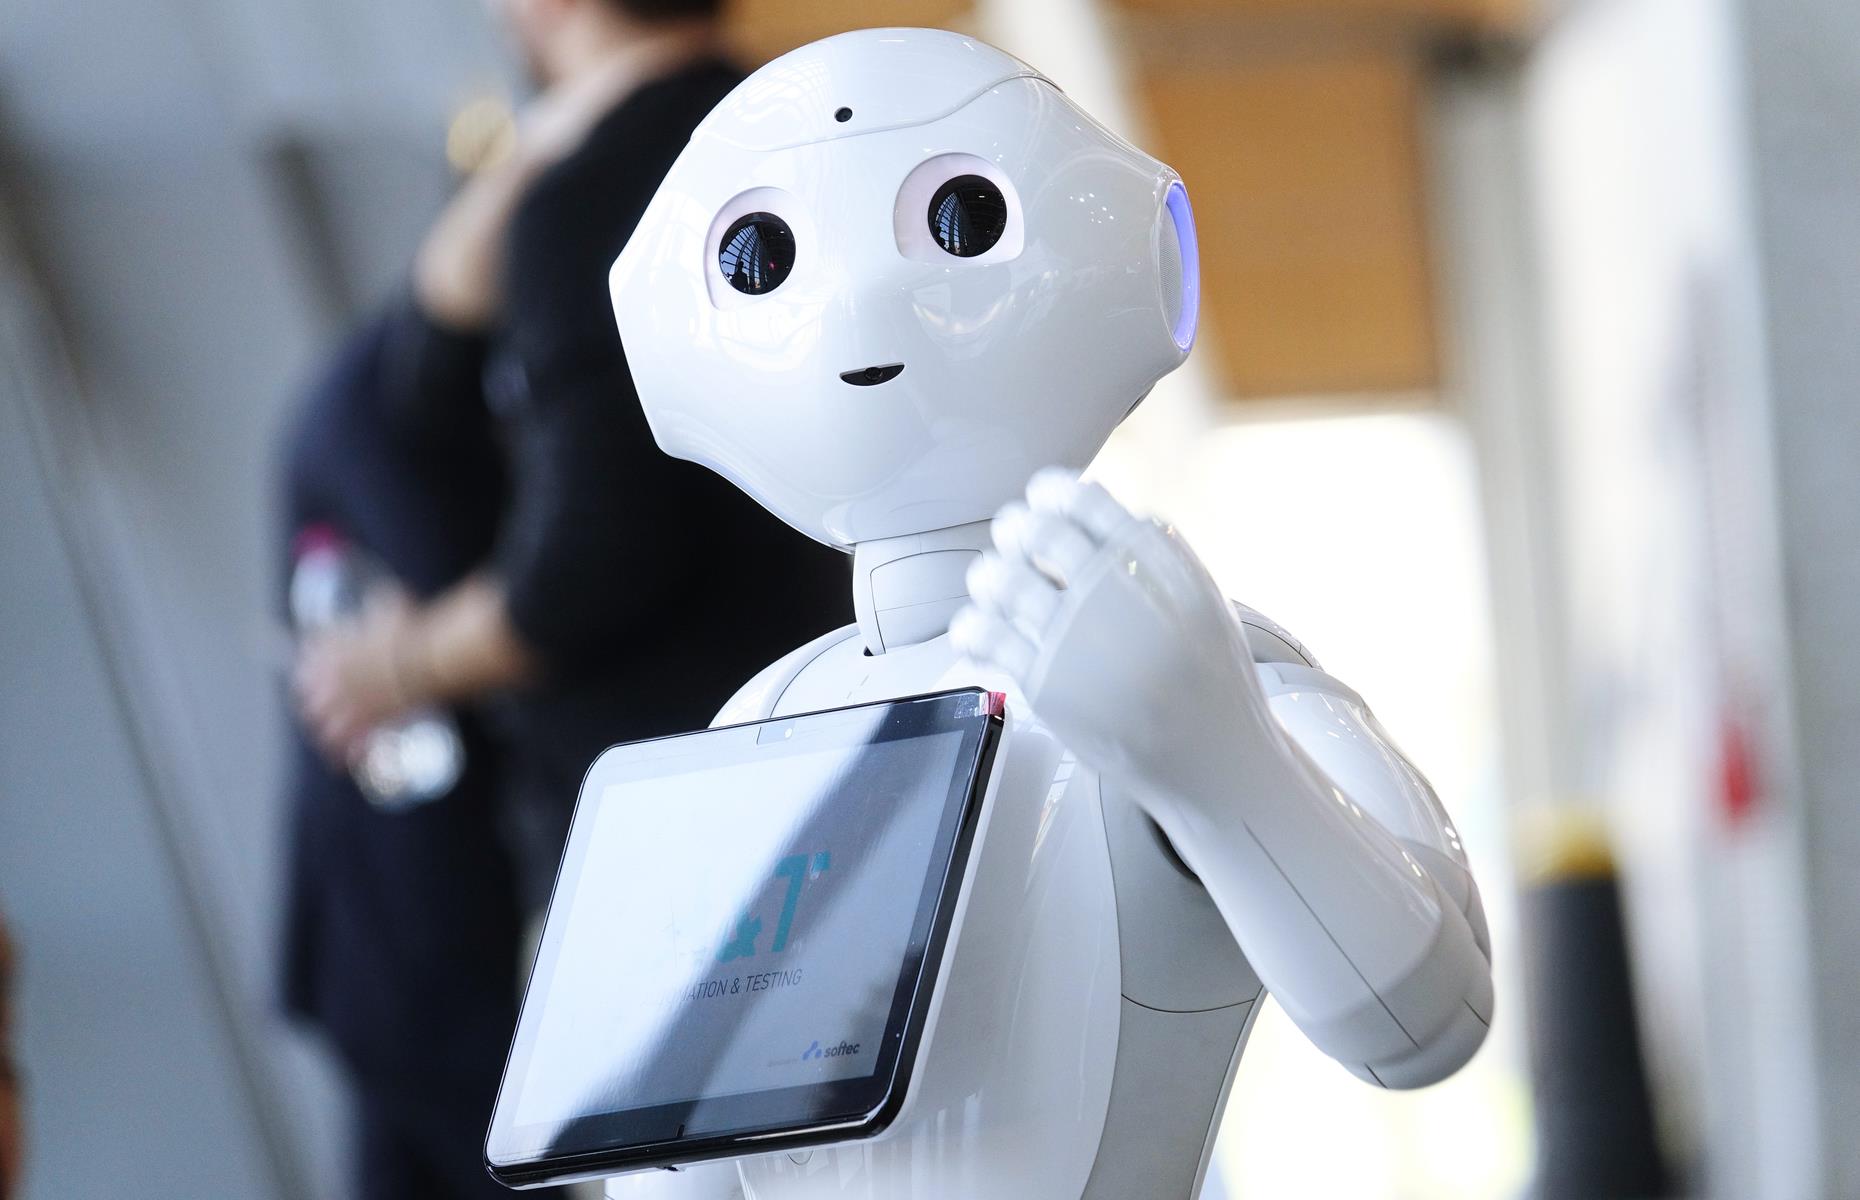 Personal robot assistants: 2045?